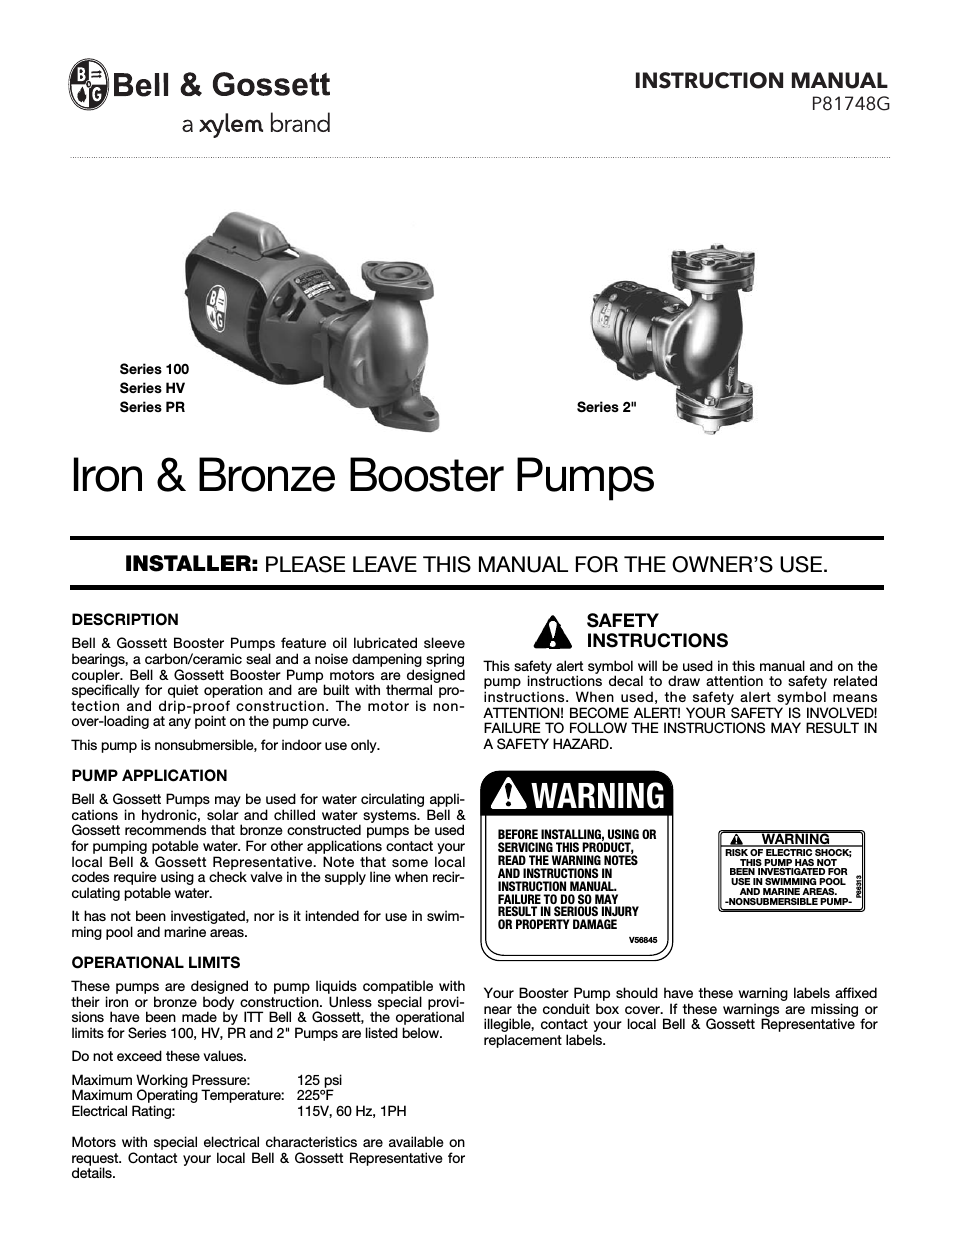 Iron & Bronze Booster Pumps Series PR